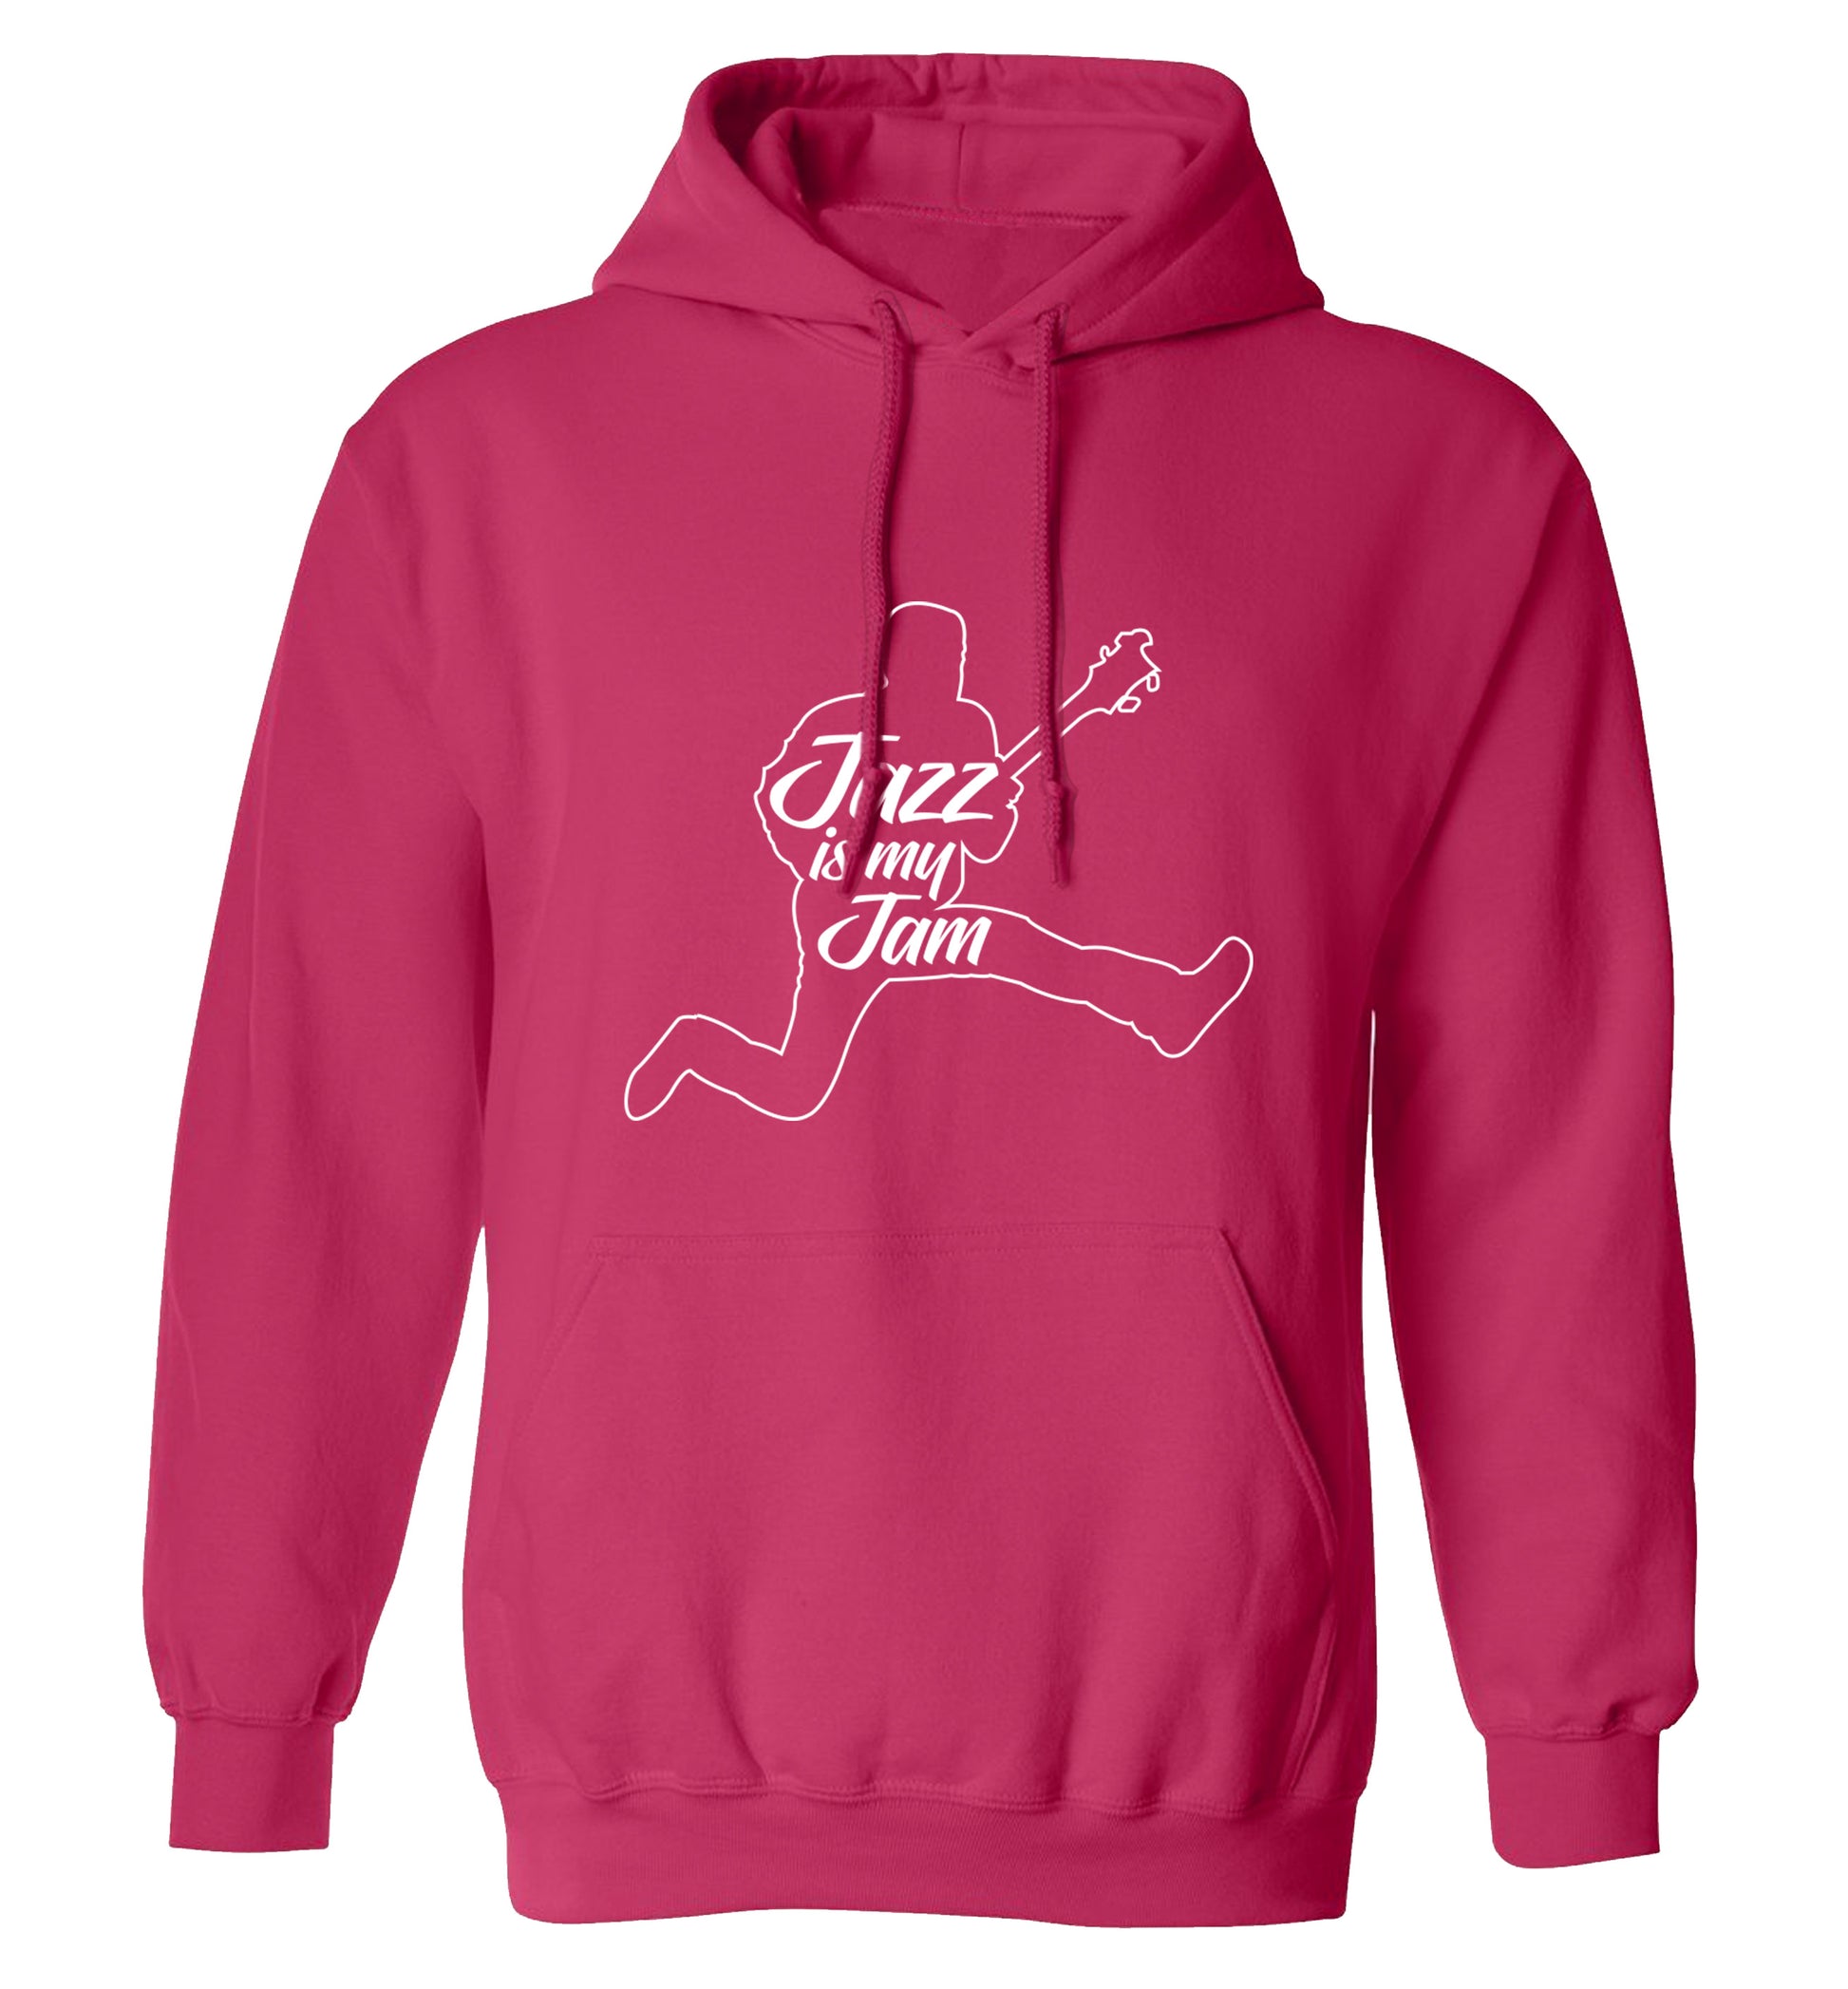 Jazz is my jam adults unisex pink hoodie 2XL